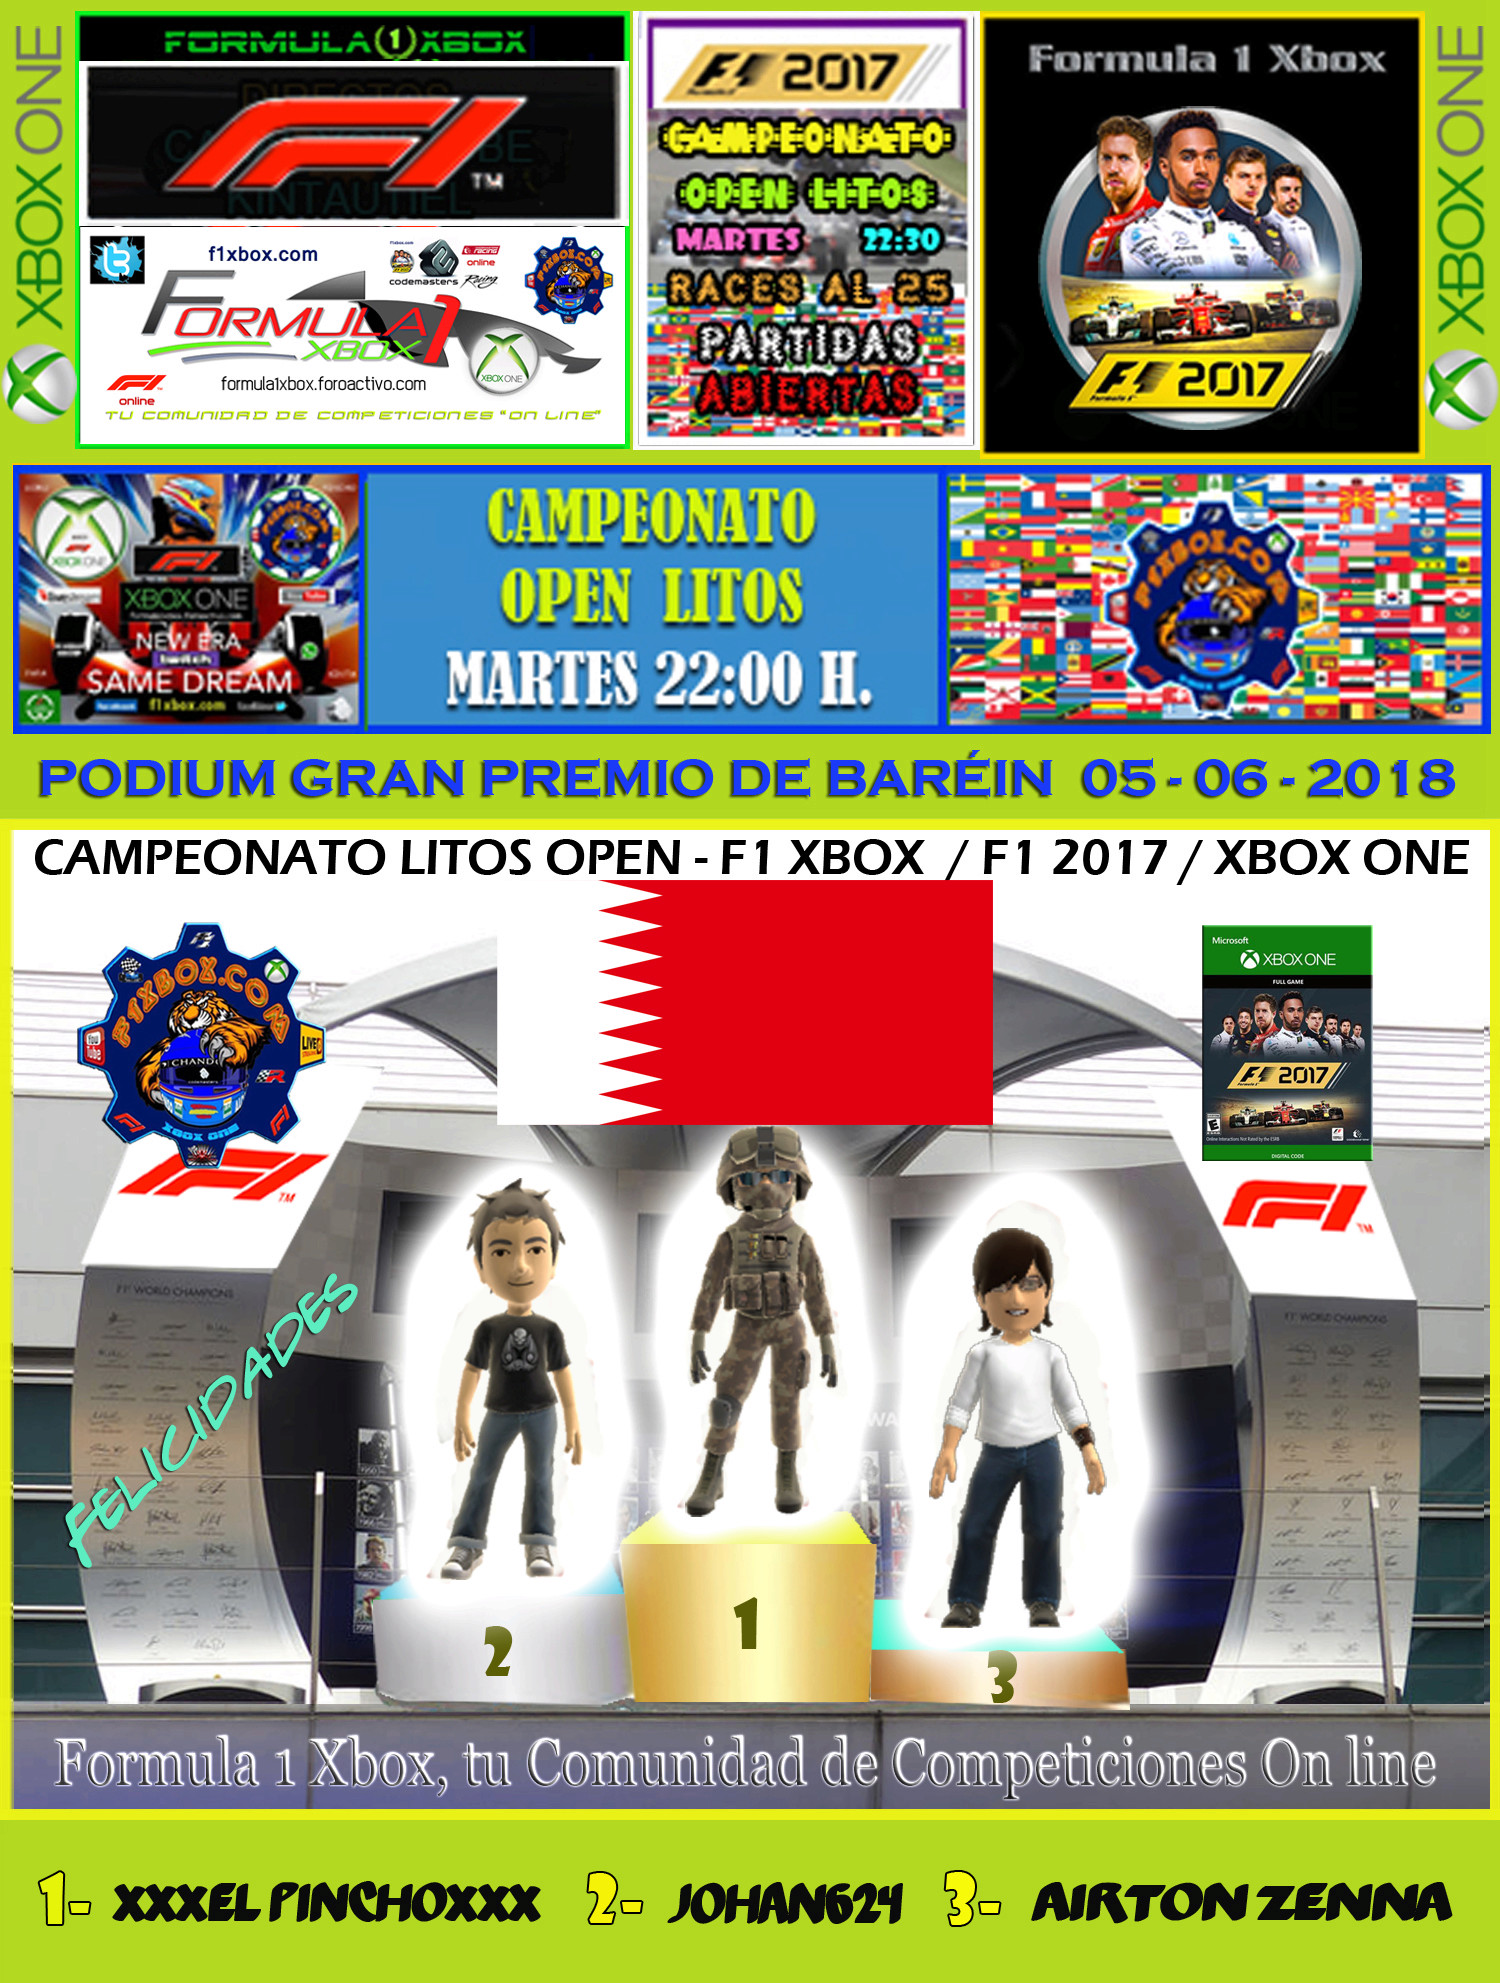 F1 2017 - XBOX ONE / CAMPEONATO OPEN LITOS - F1 XBOX / RESULTADOS Y PODIUM / G.P. DE BAREIN + GP DE MÉXICO / MARTES 05 - 06 - 2018. Podium61